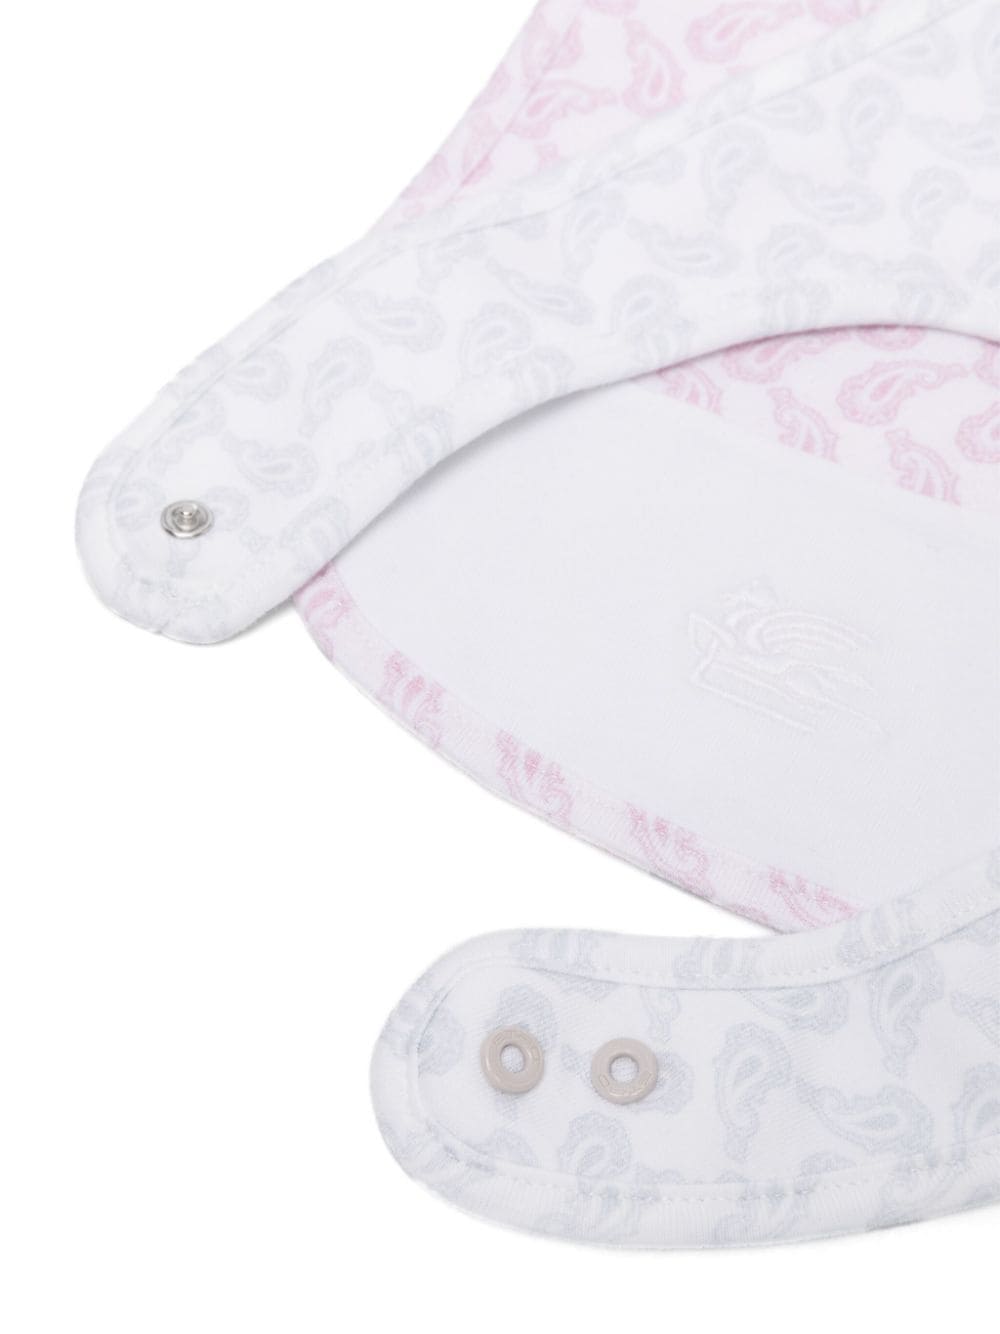 Bavaglini neonato bianchi/rosa